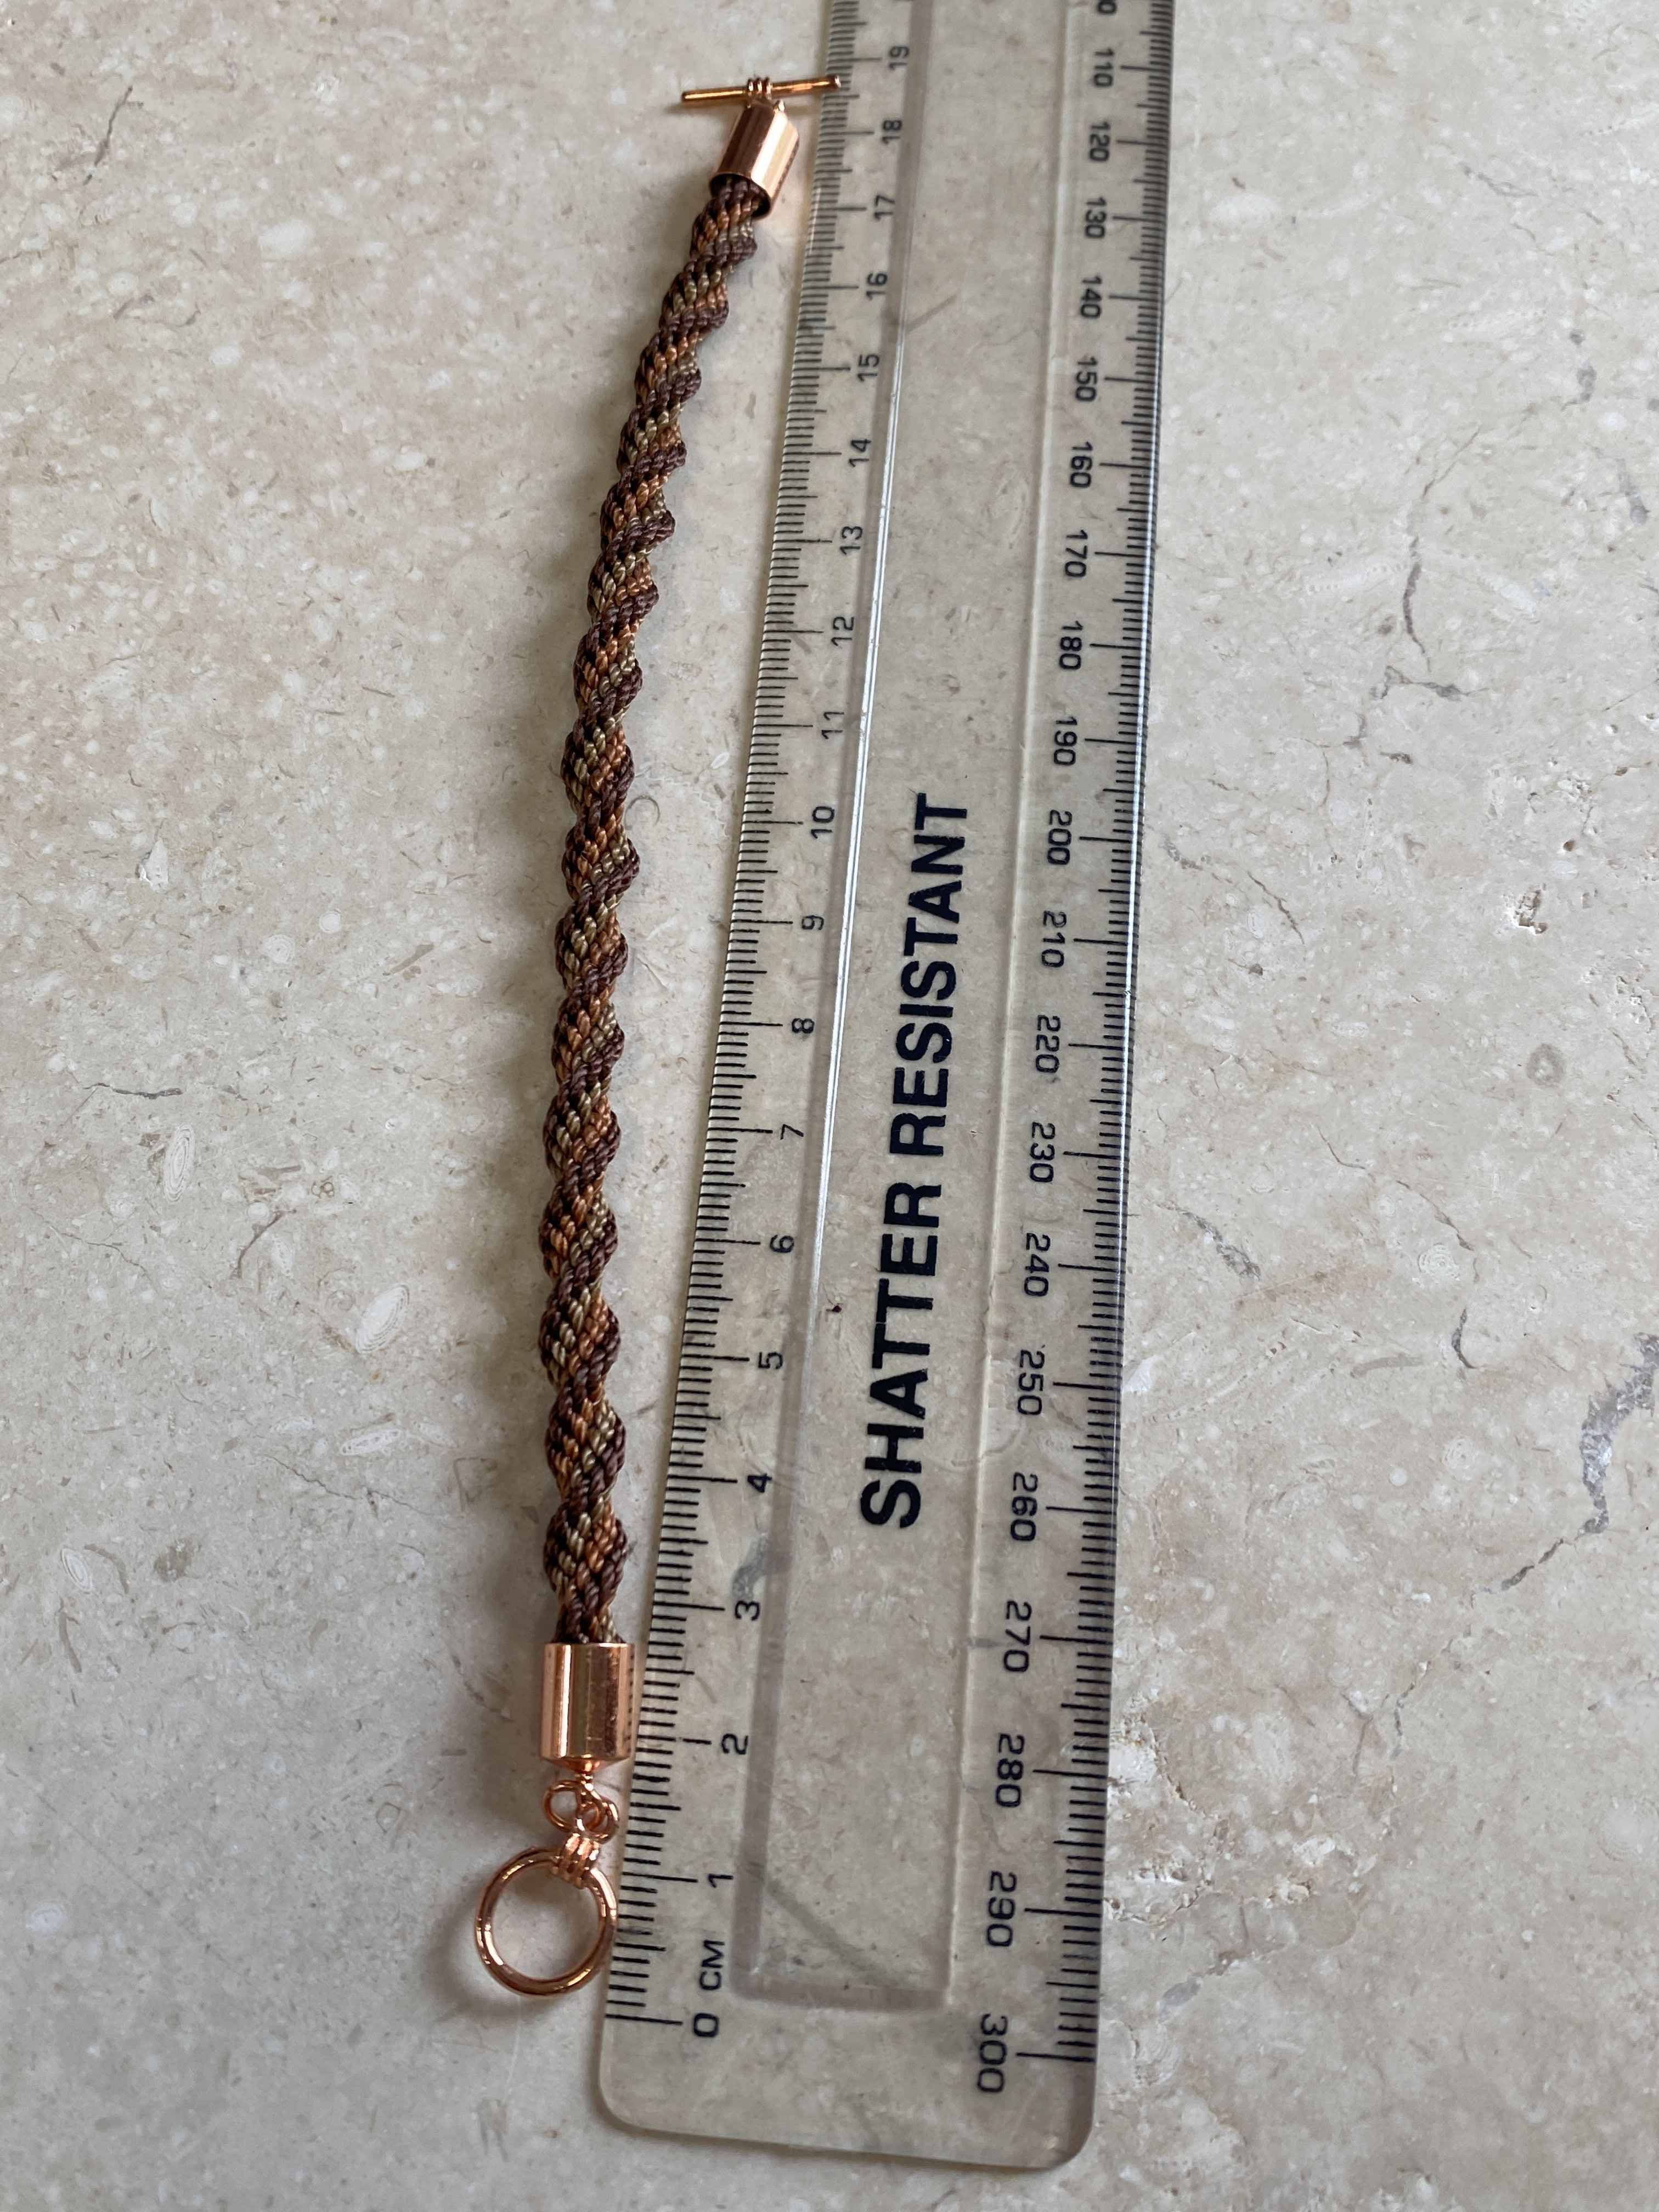 Spiral Braided/Woven Kumihimo Bracelet - Shades of Brown Colours - Handmade Japanese Wristband/Bracelet